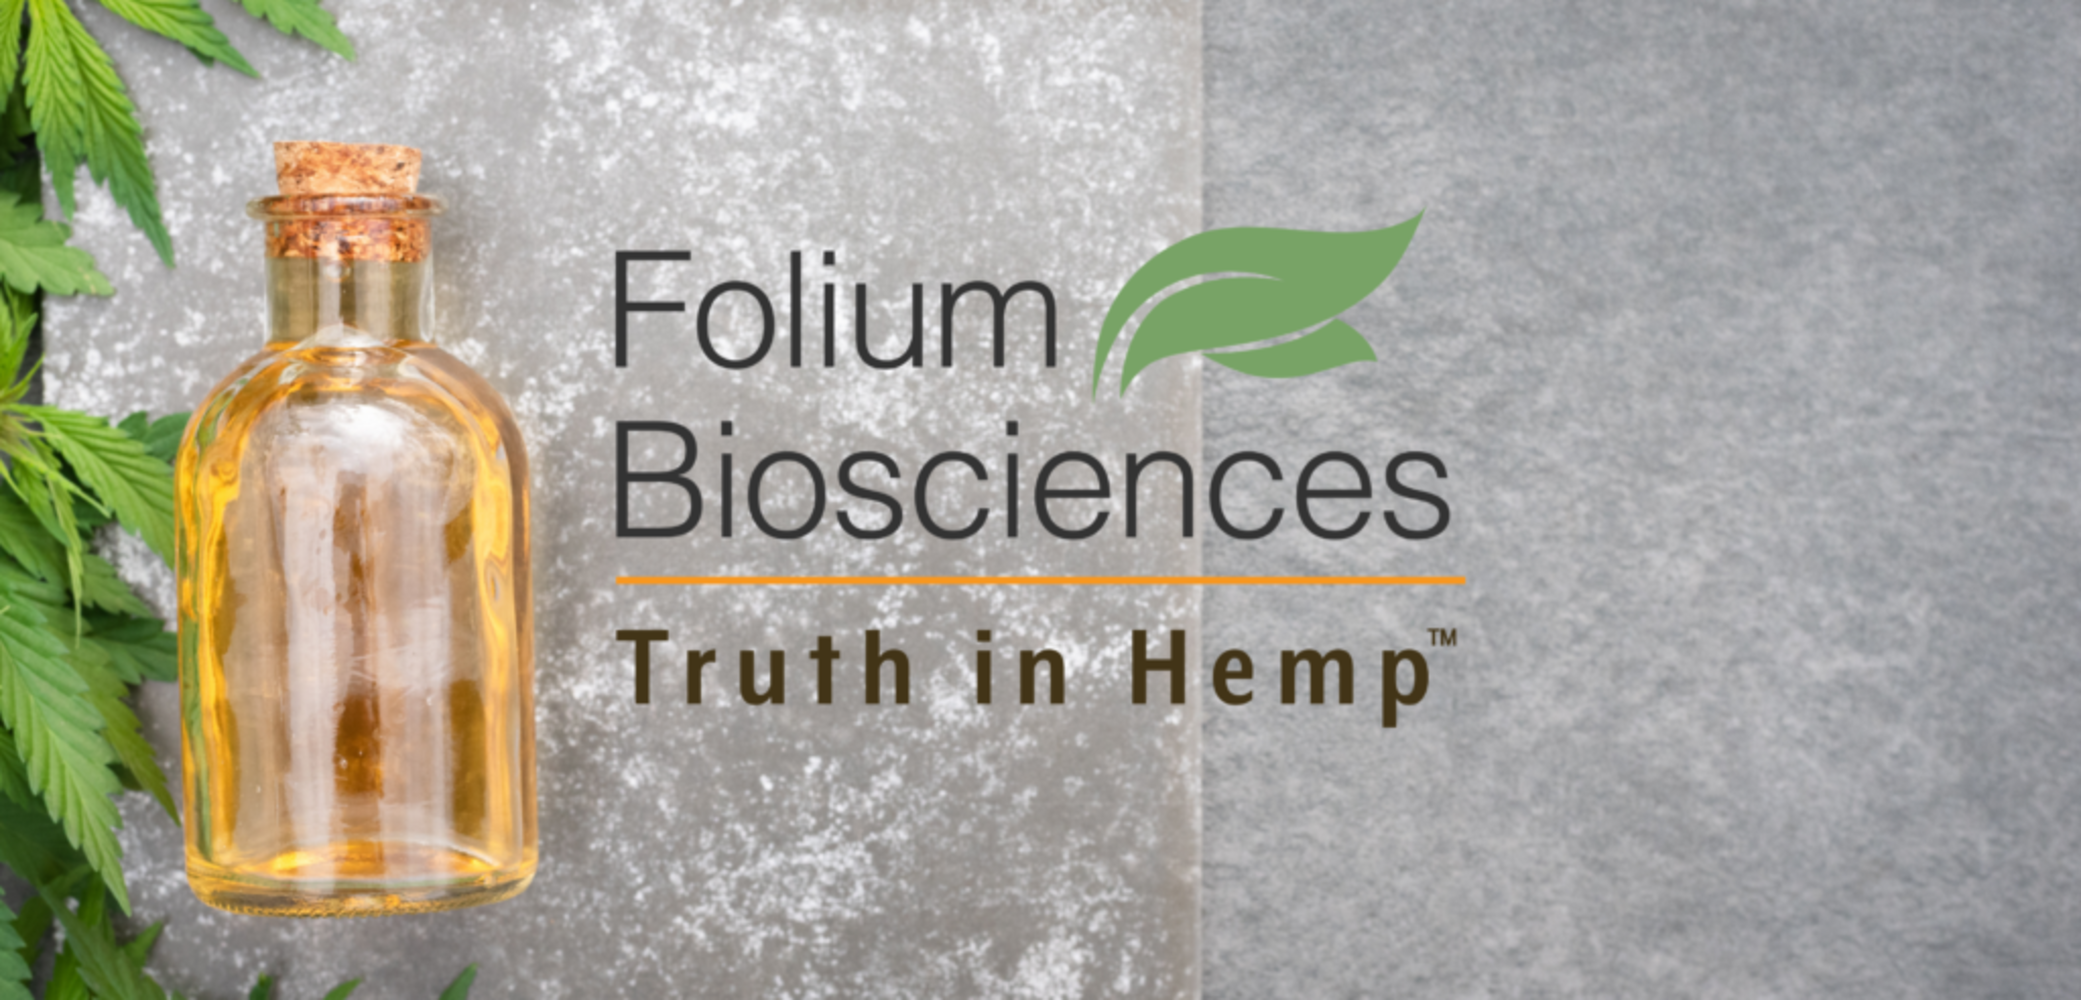 Day 2 - Folium Biosciences Support Equipment, Refrigerated Trailer Fleet, Box Trucks, Forklifts, XP Containers, Maintenance, Air Handling, Parts